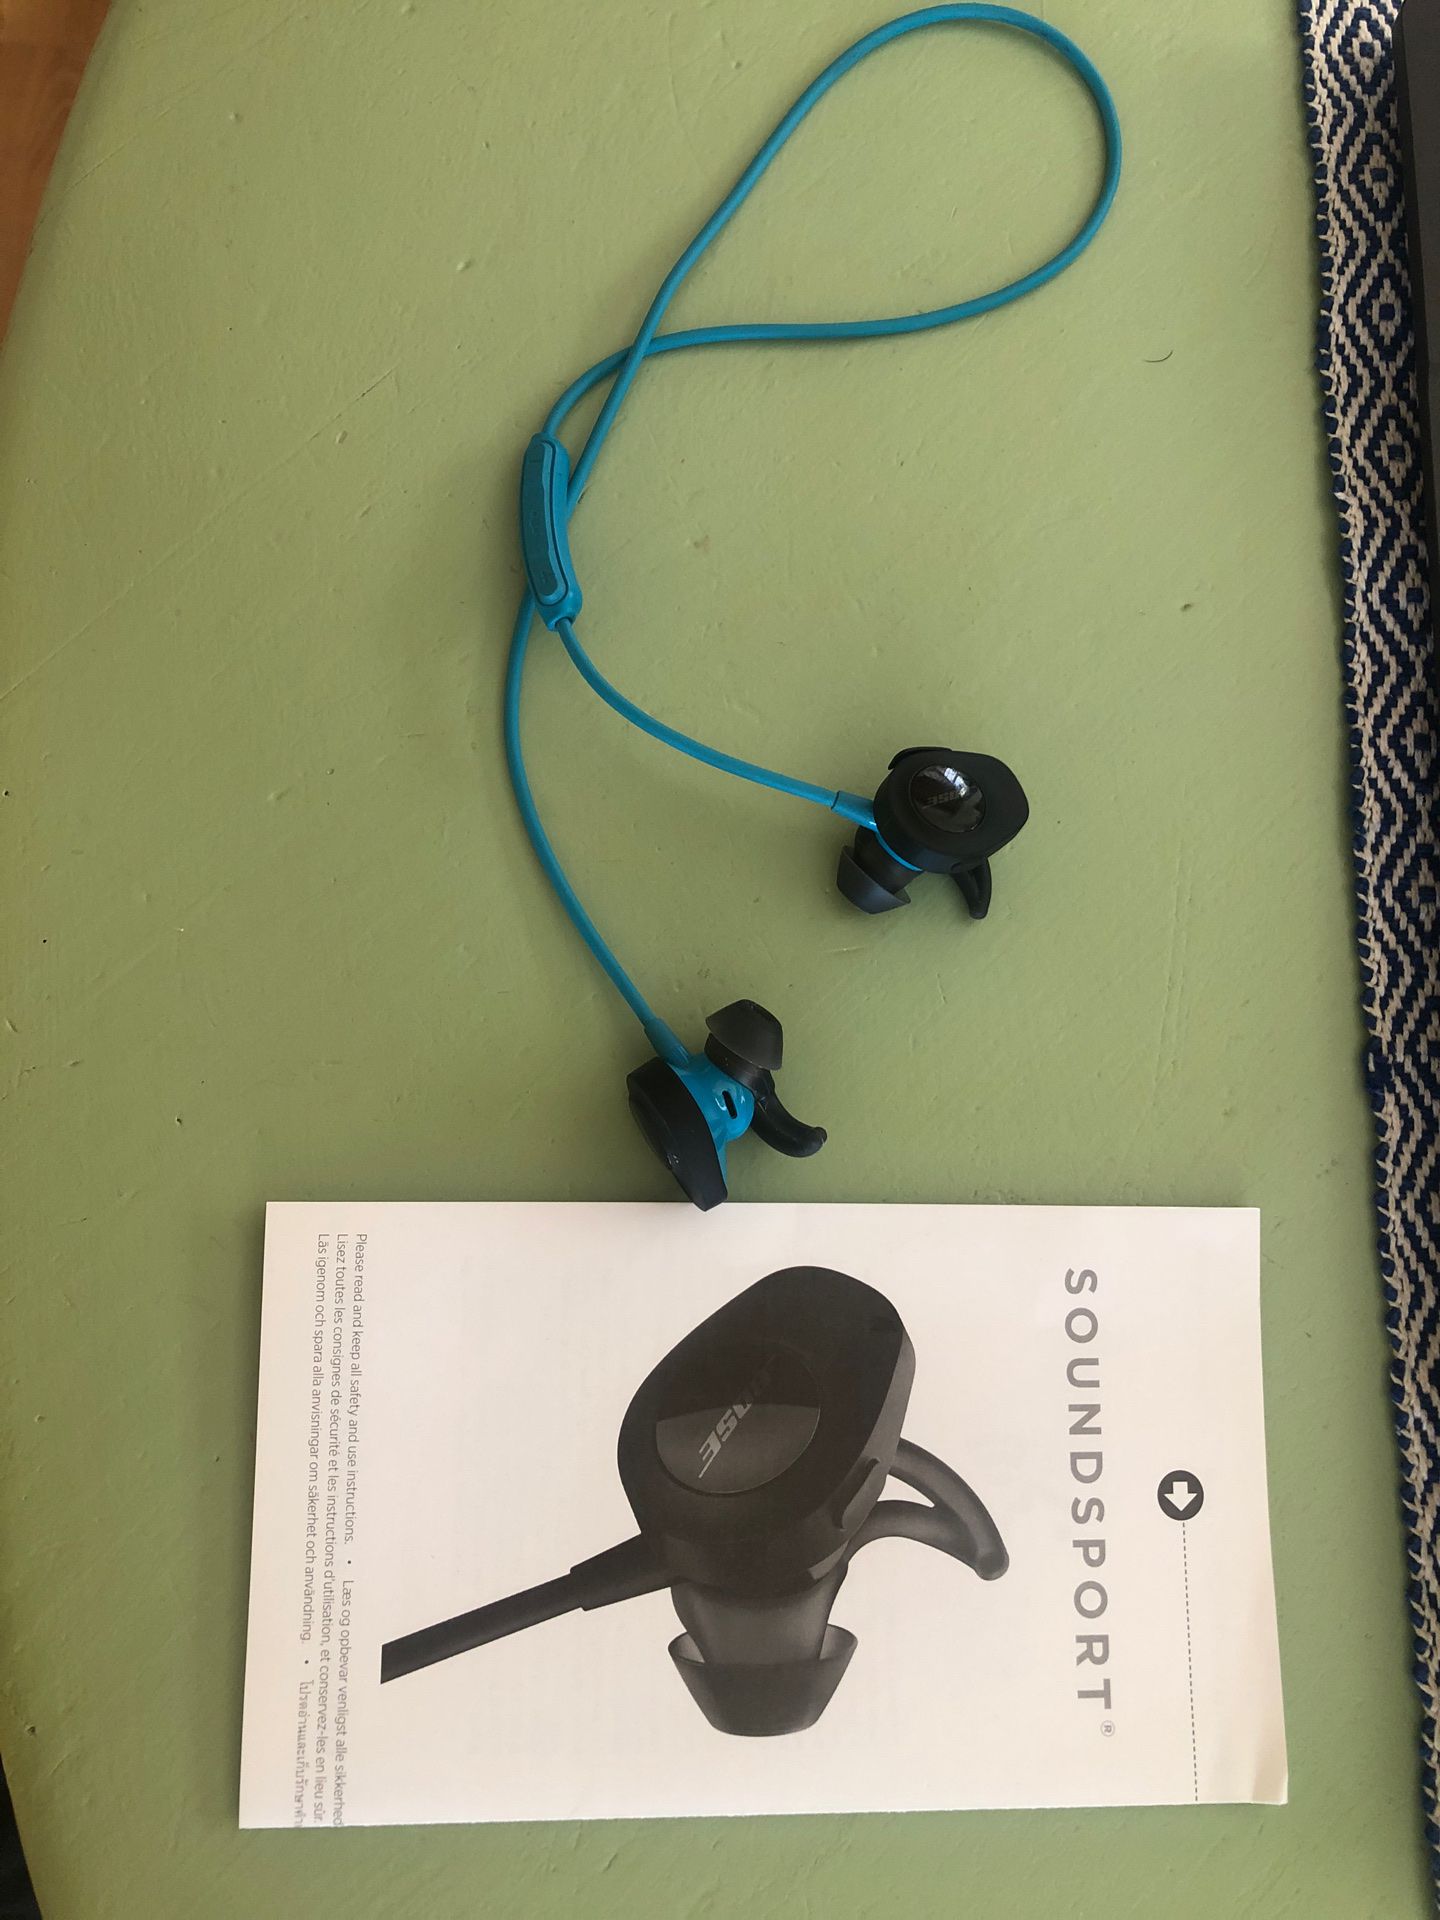 Bose soundsport wireless earbuds